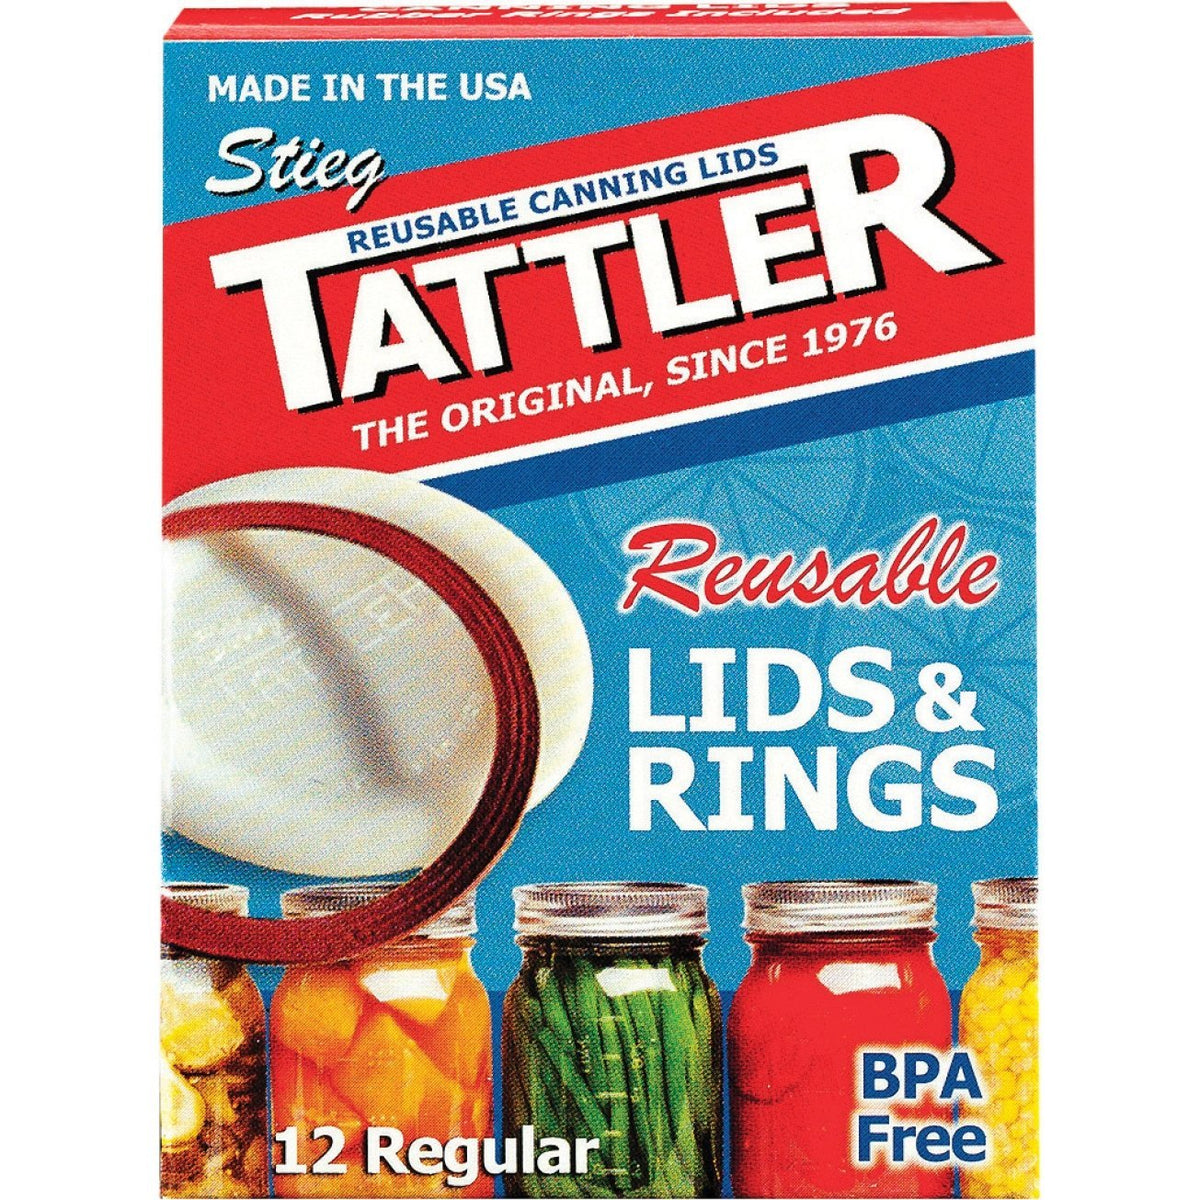 Tattler 1010-1 Regular Mouth Reusable Canning Lid w/ Rubber Ring, 24-Piece